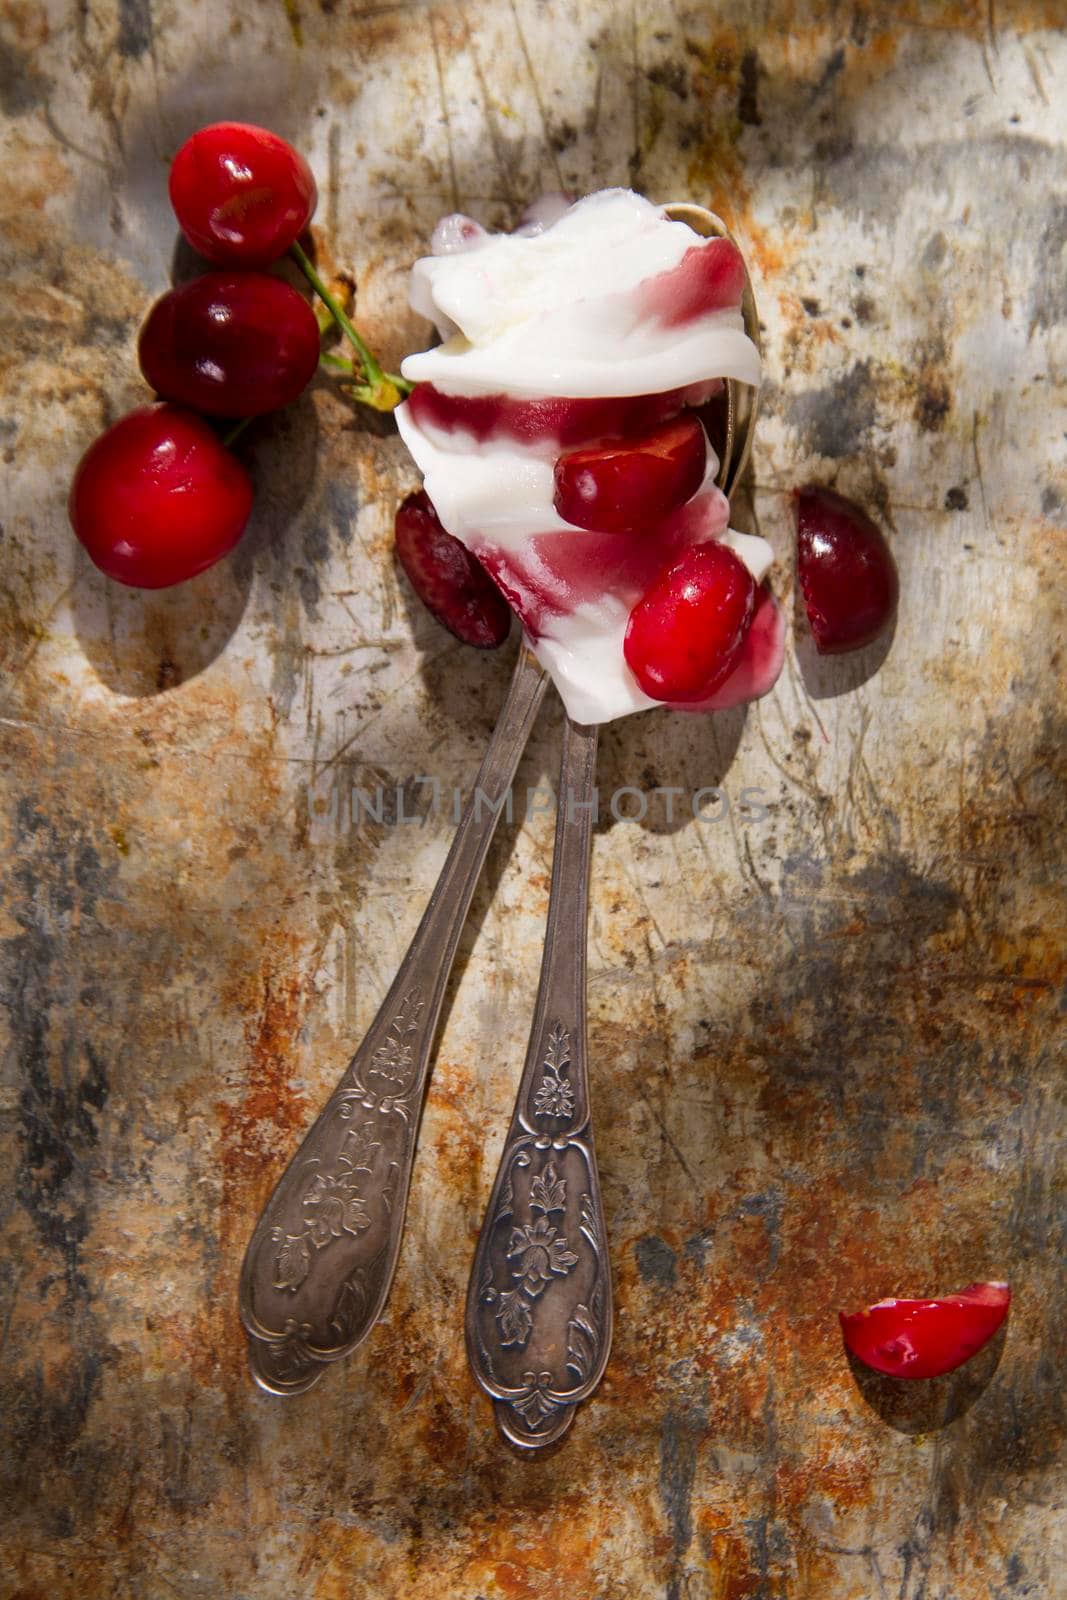 Artisan ice cream made with cream and cherries